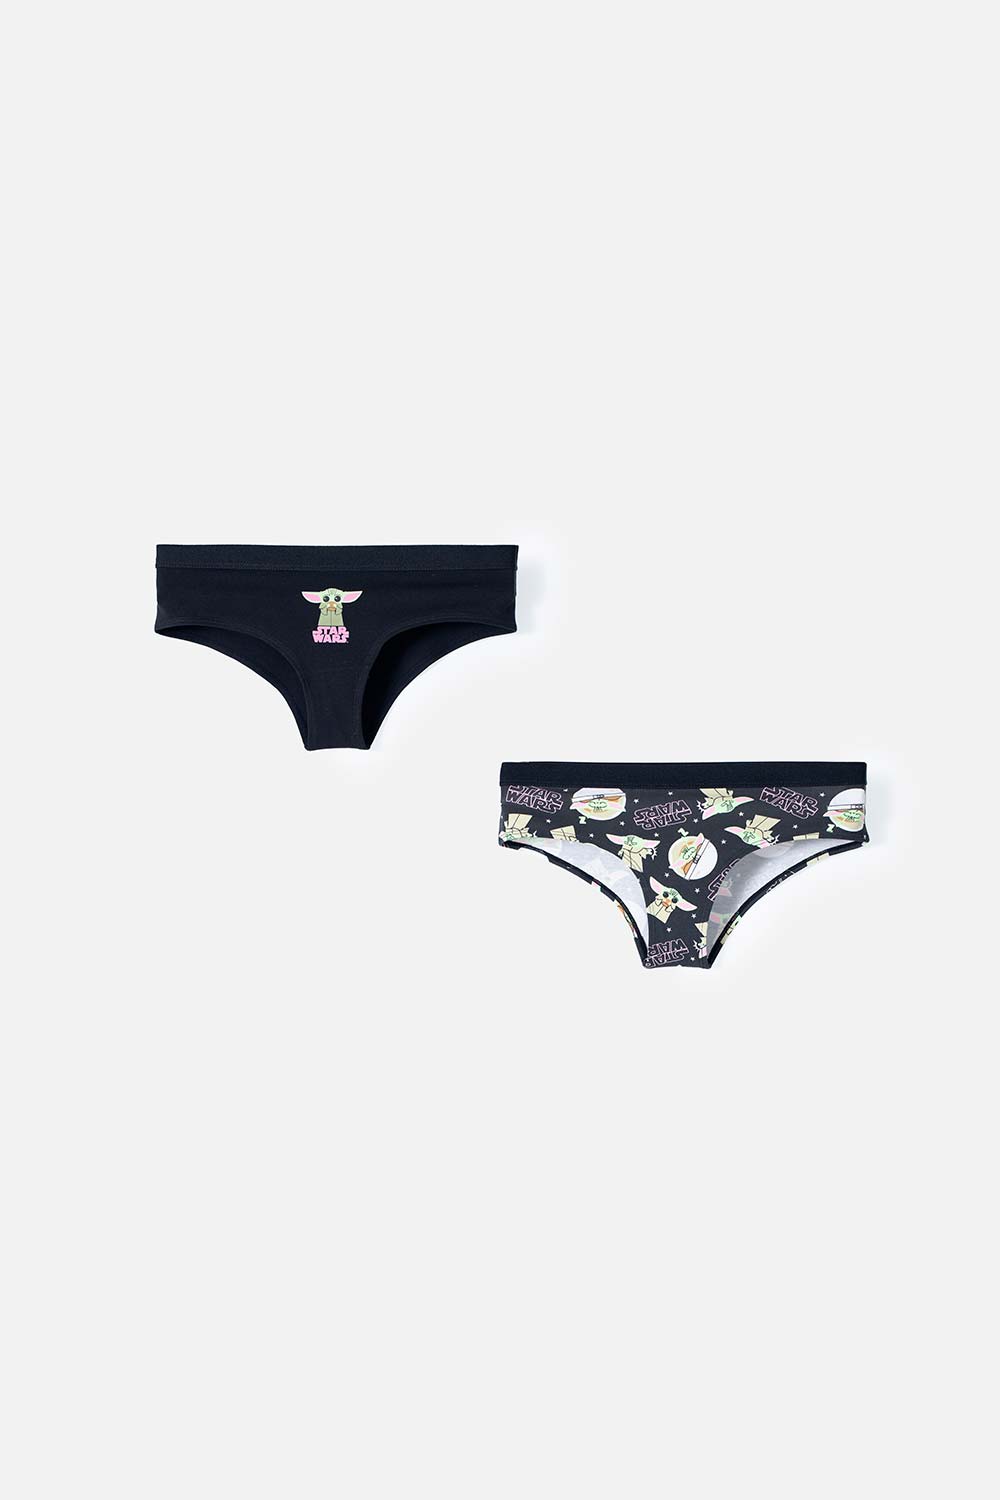 Pack x2 panties de Mandalorian estampado negro para mujer S-0